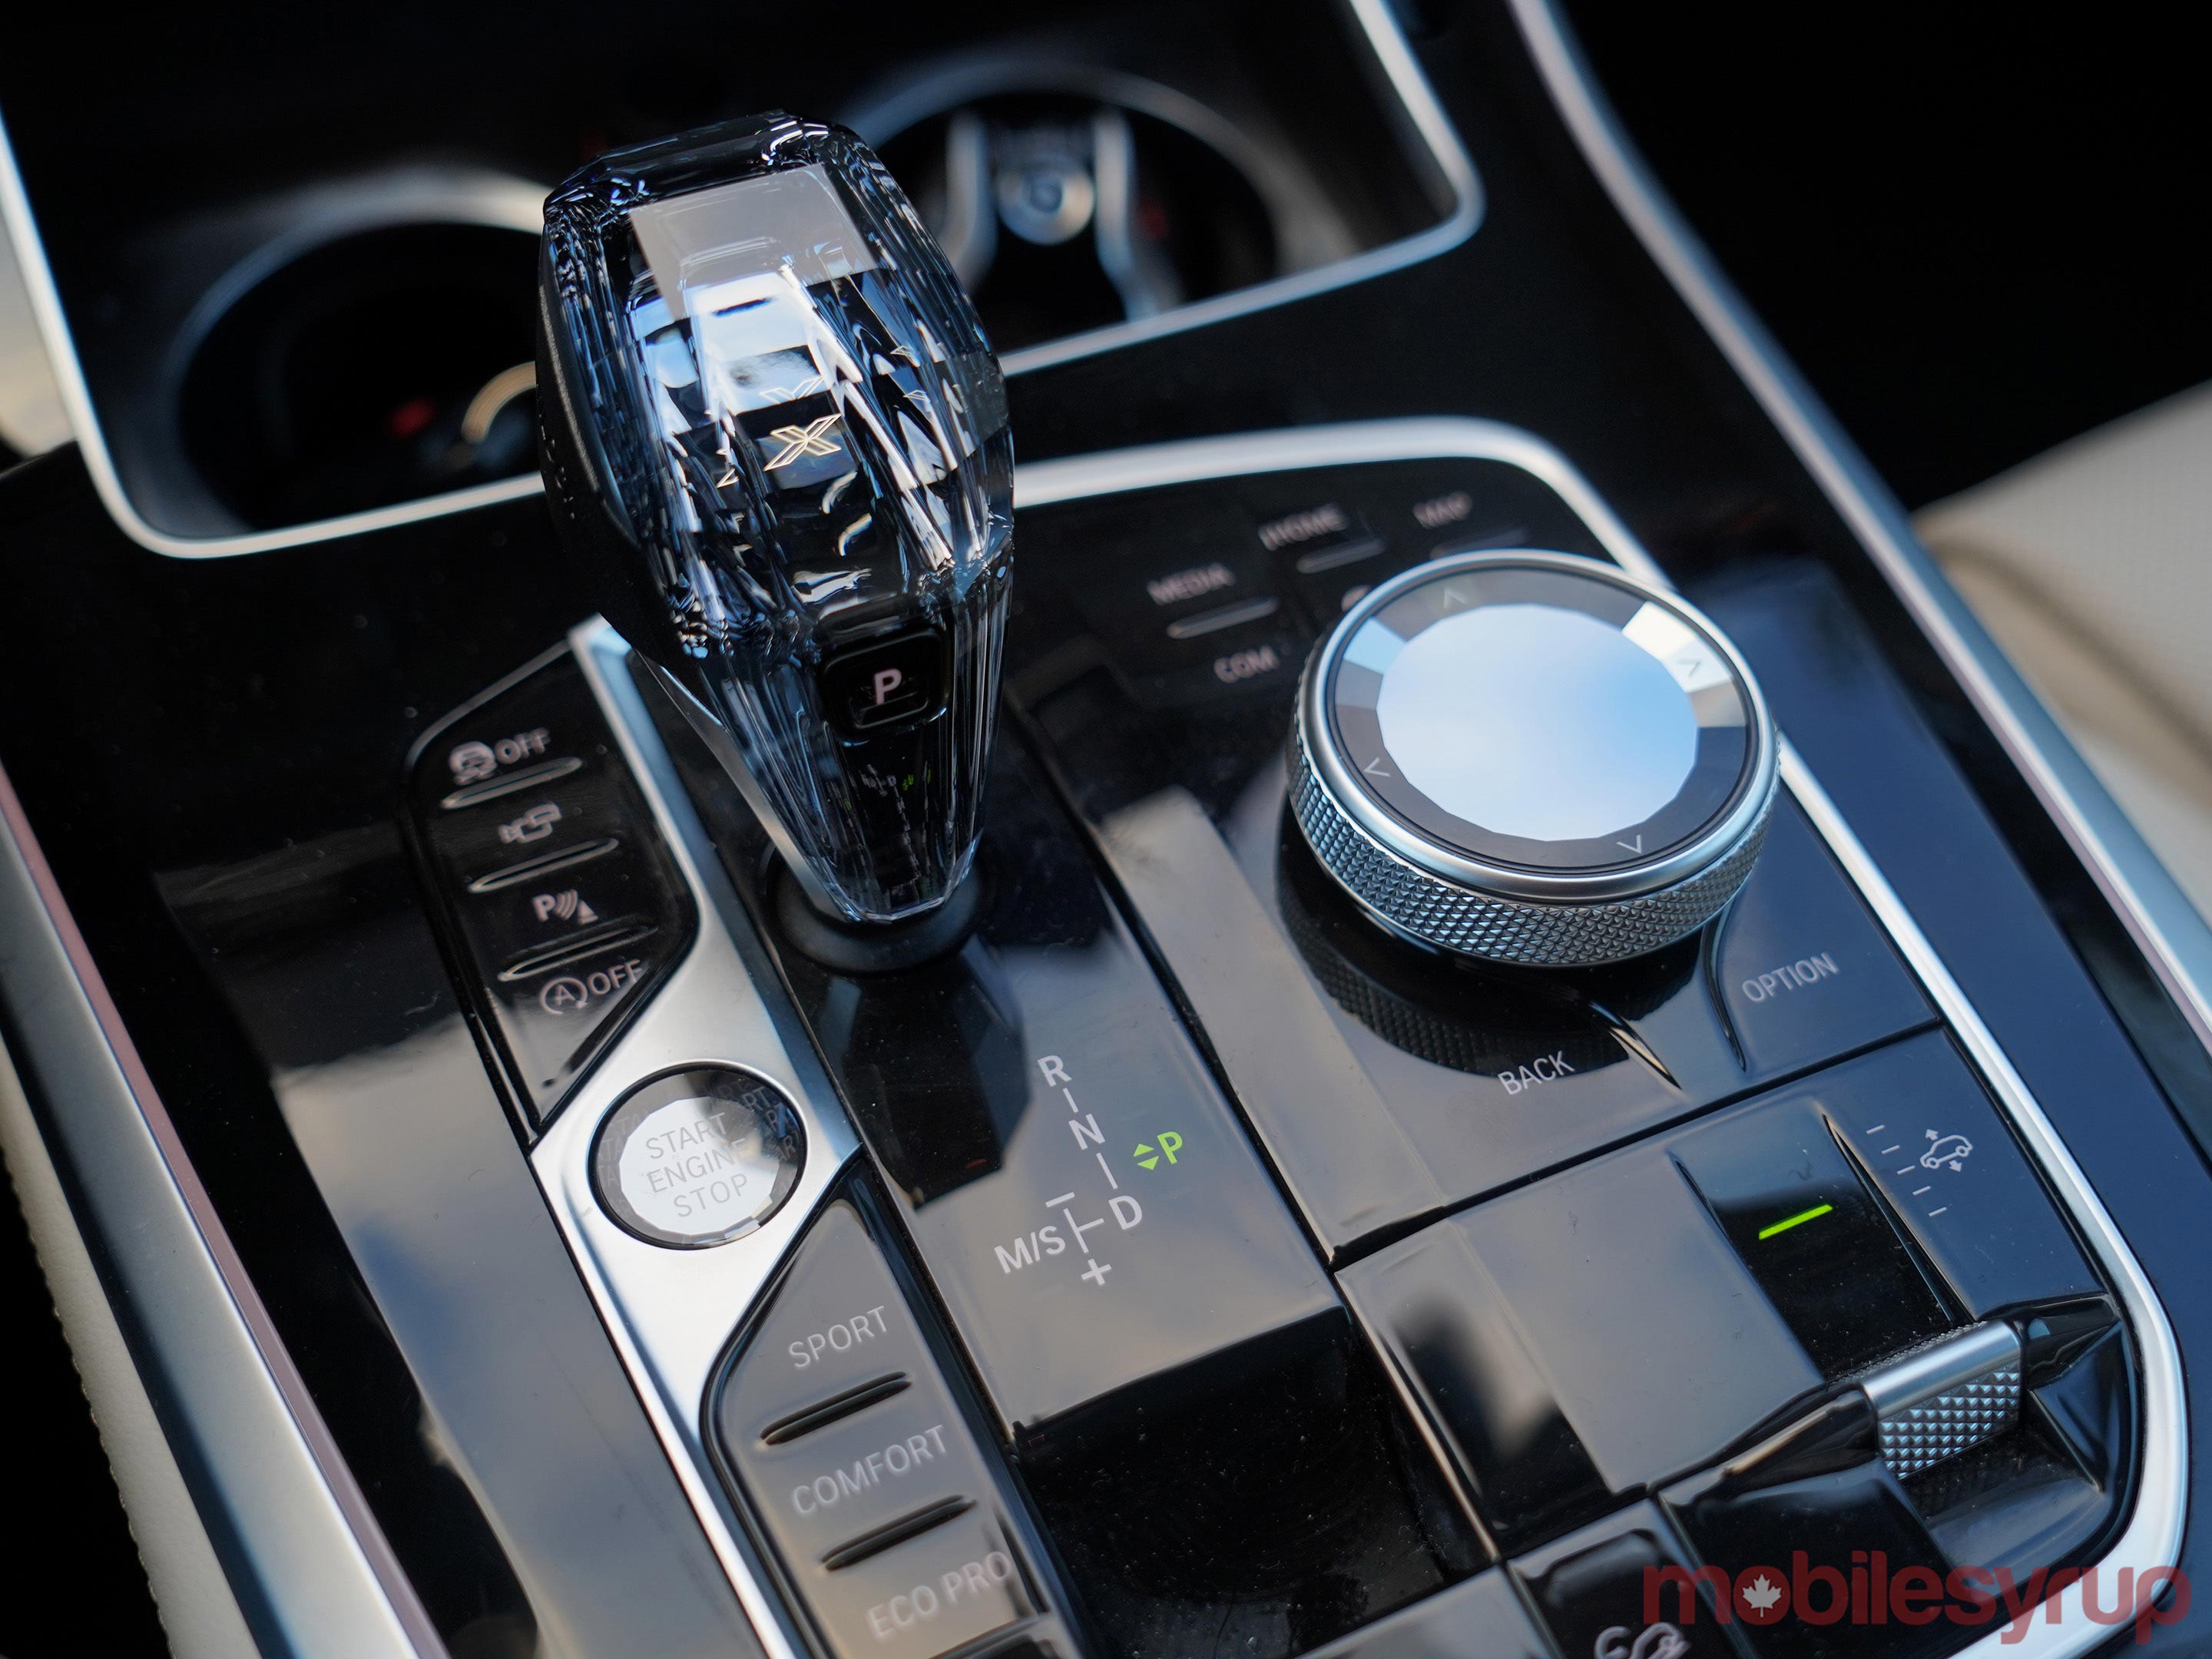 BMW X5 centre controls